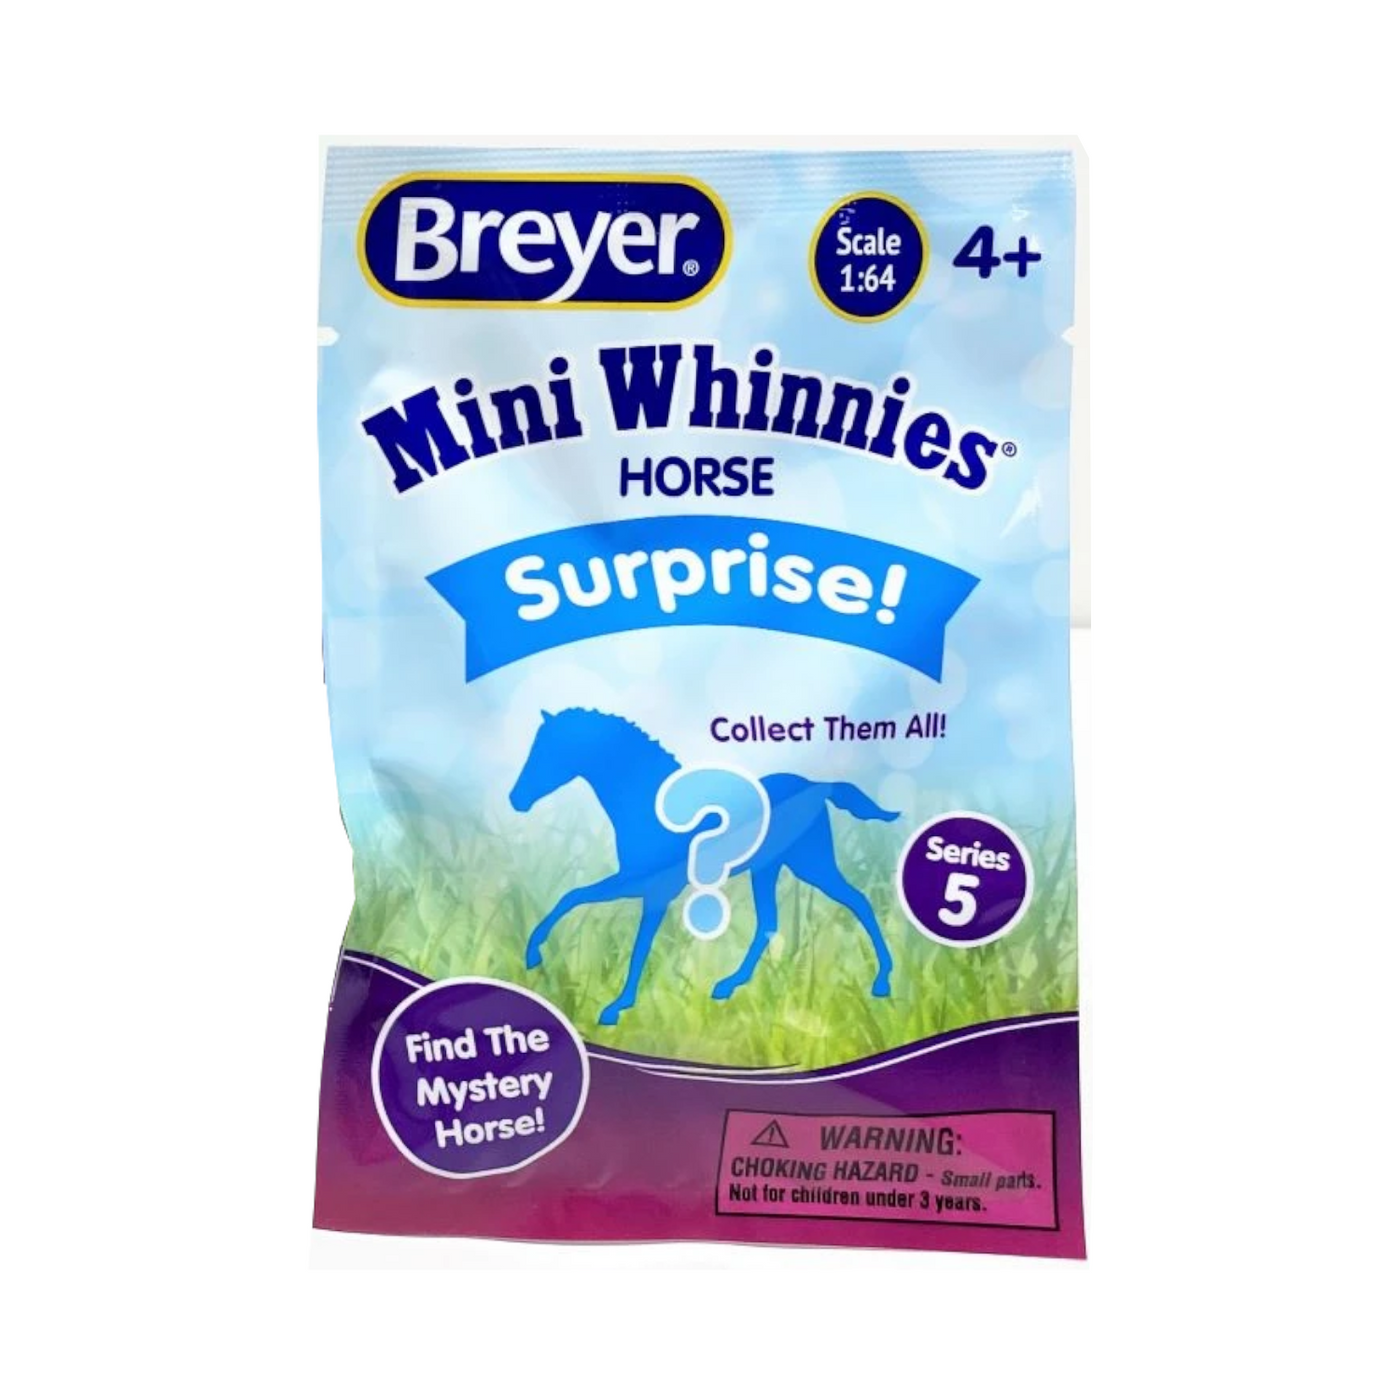 Mini Whinnies Horse Surprise!